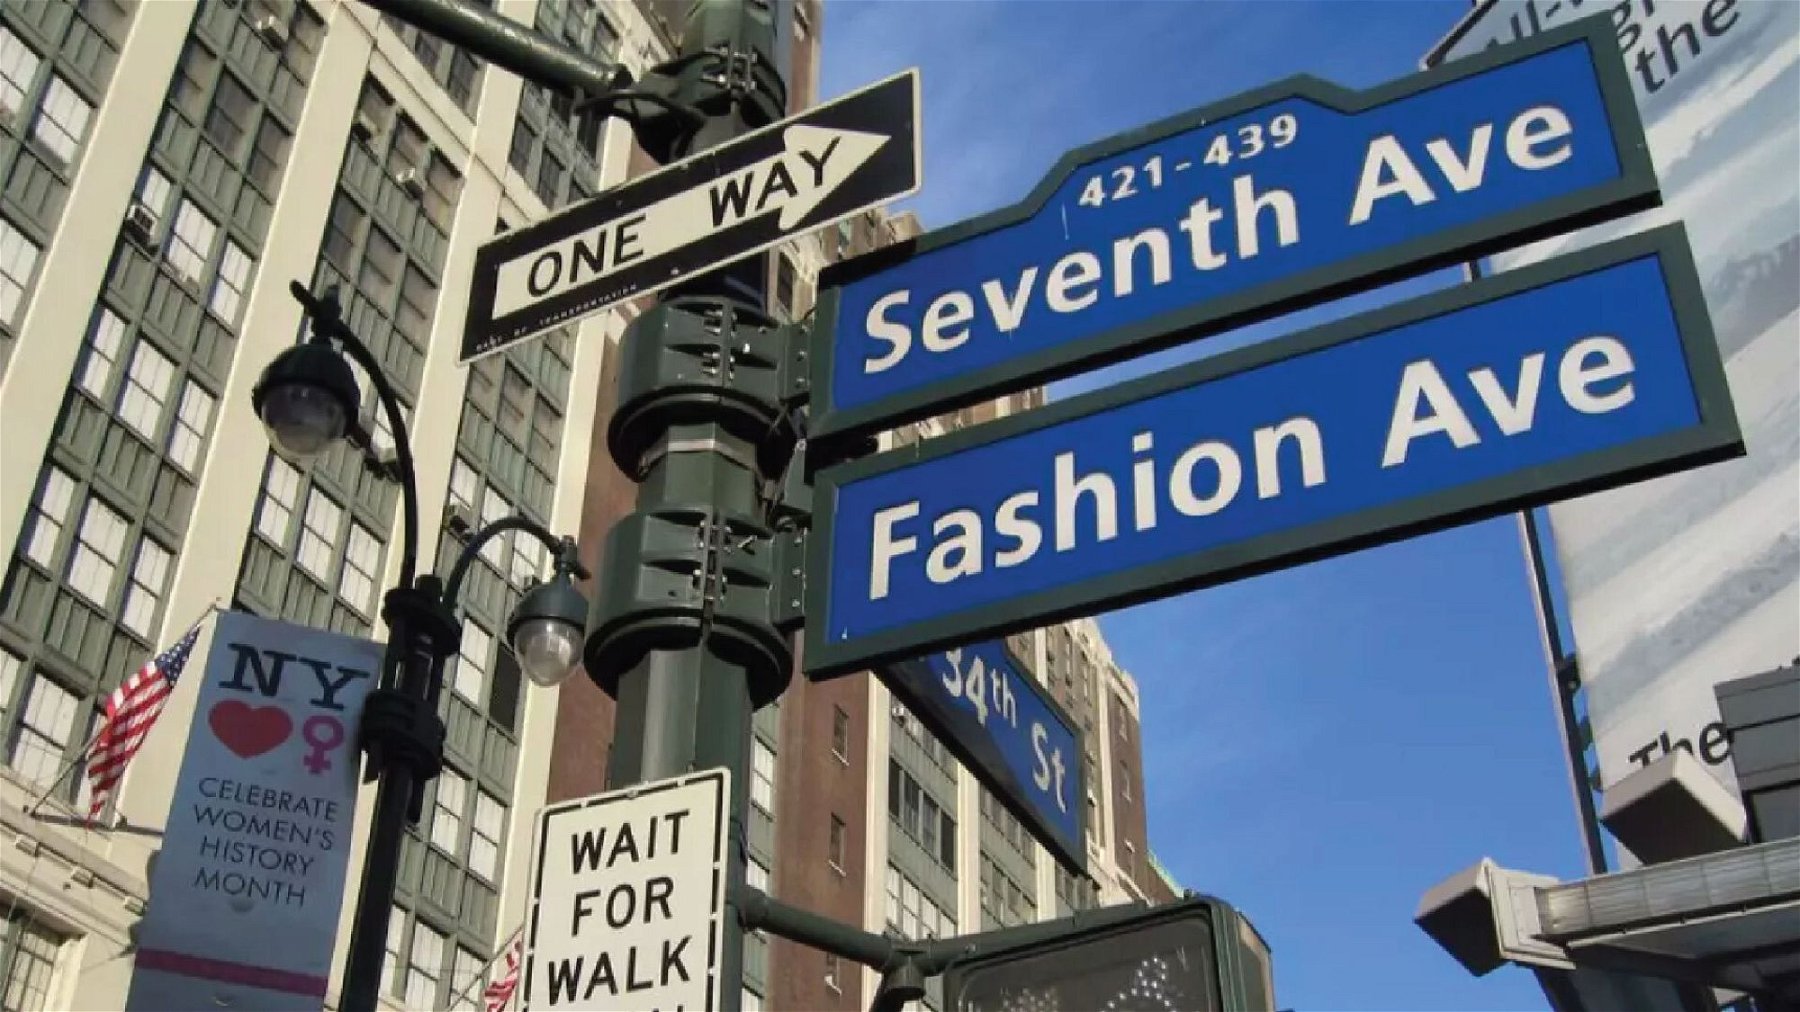  Fashion Avenue Street Sign Photography Print, Fashion